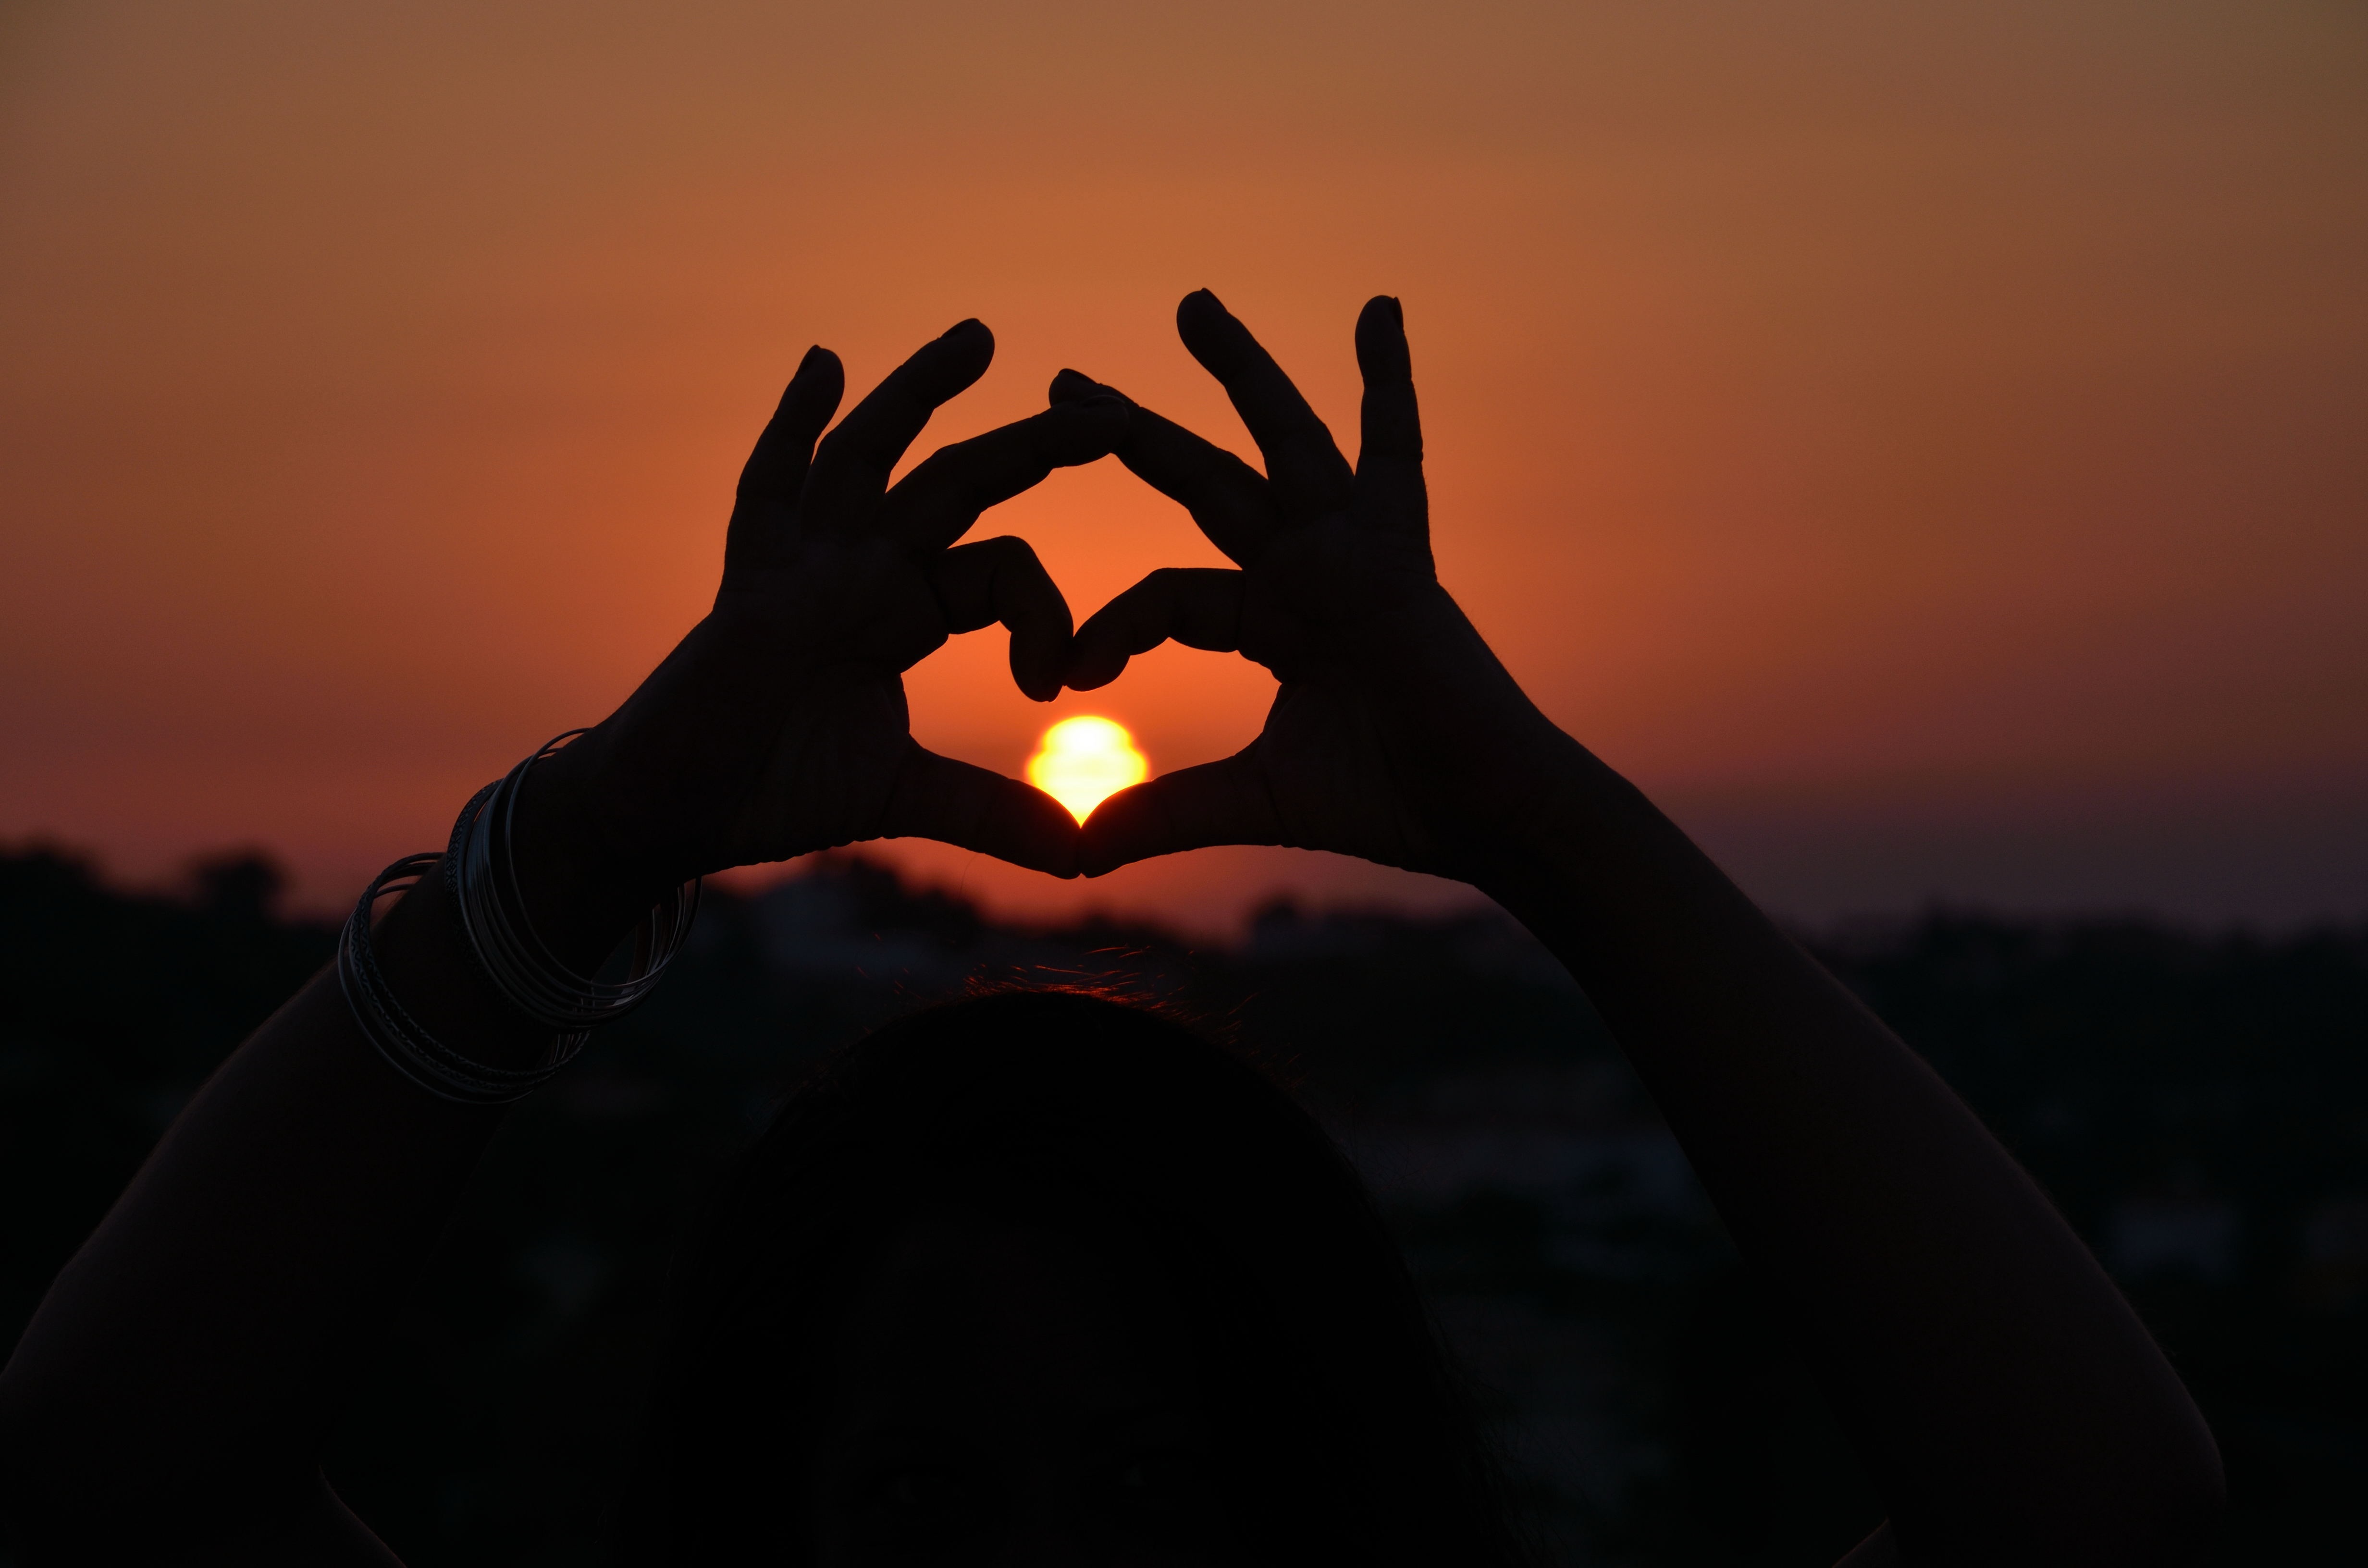 Фото сердечко руками: Сердечко из рук на фоне неба - аватары, картинки, авы